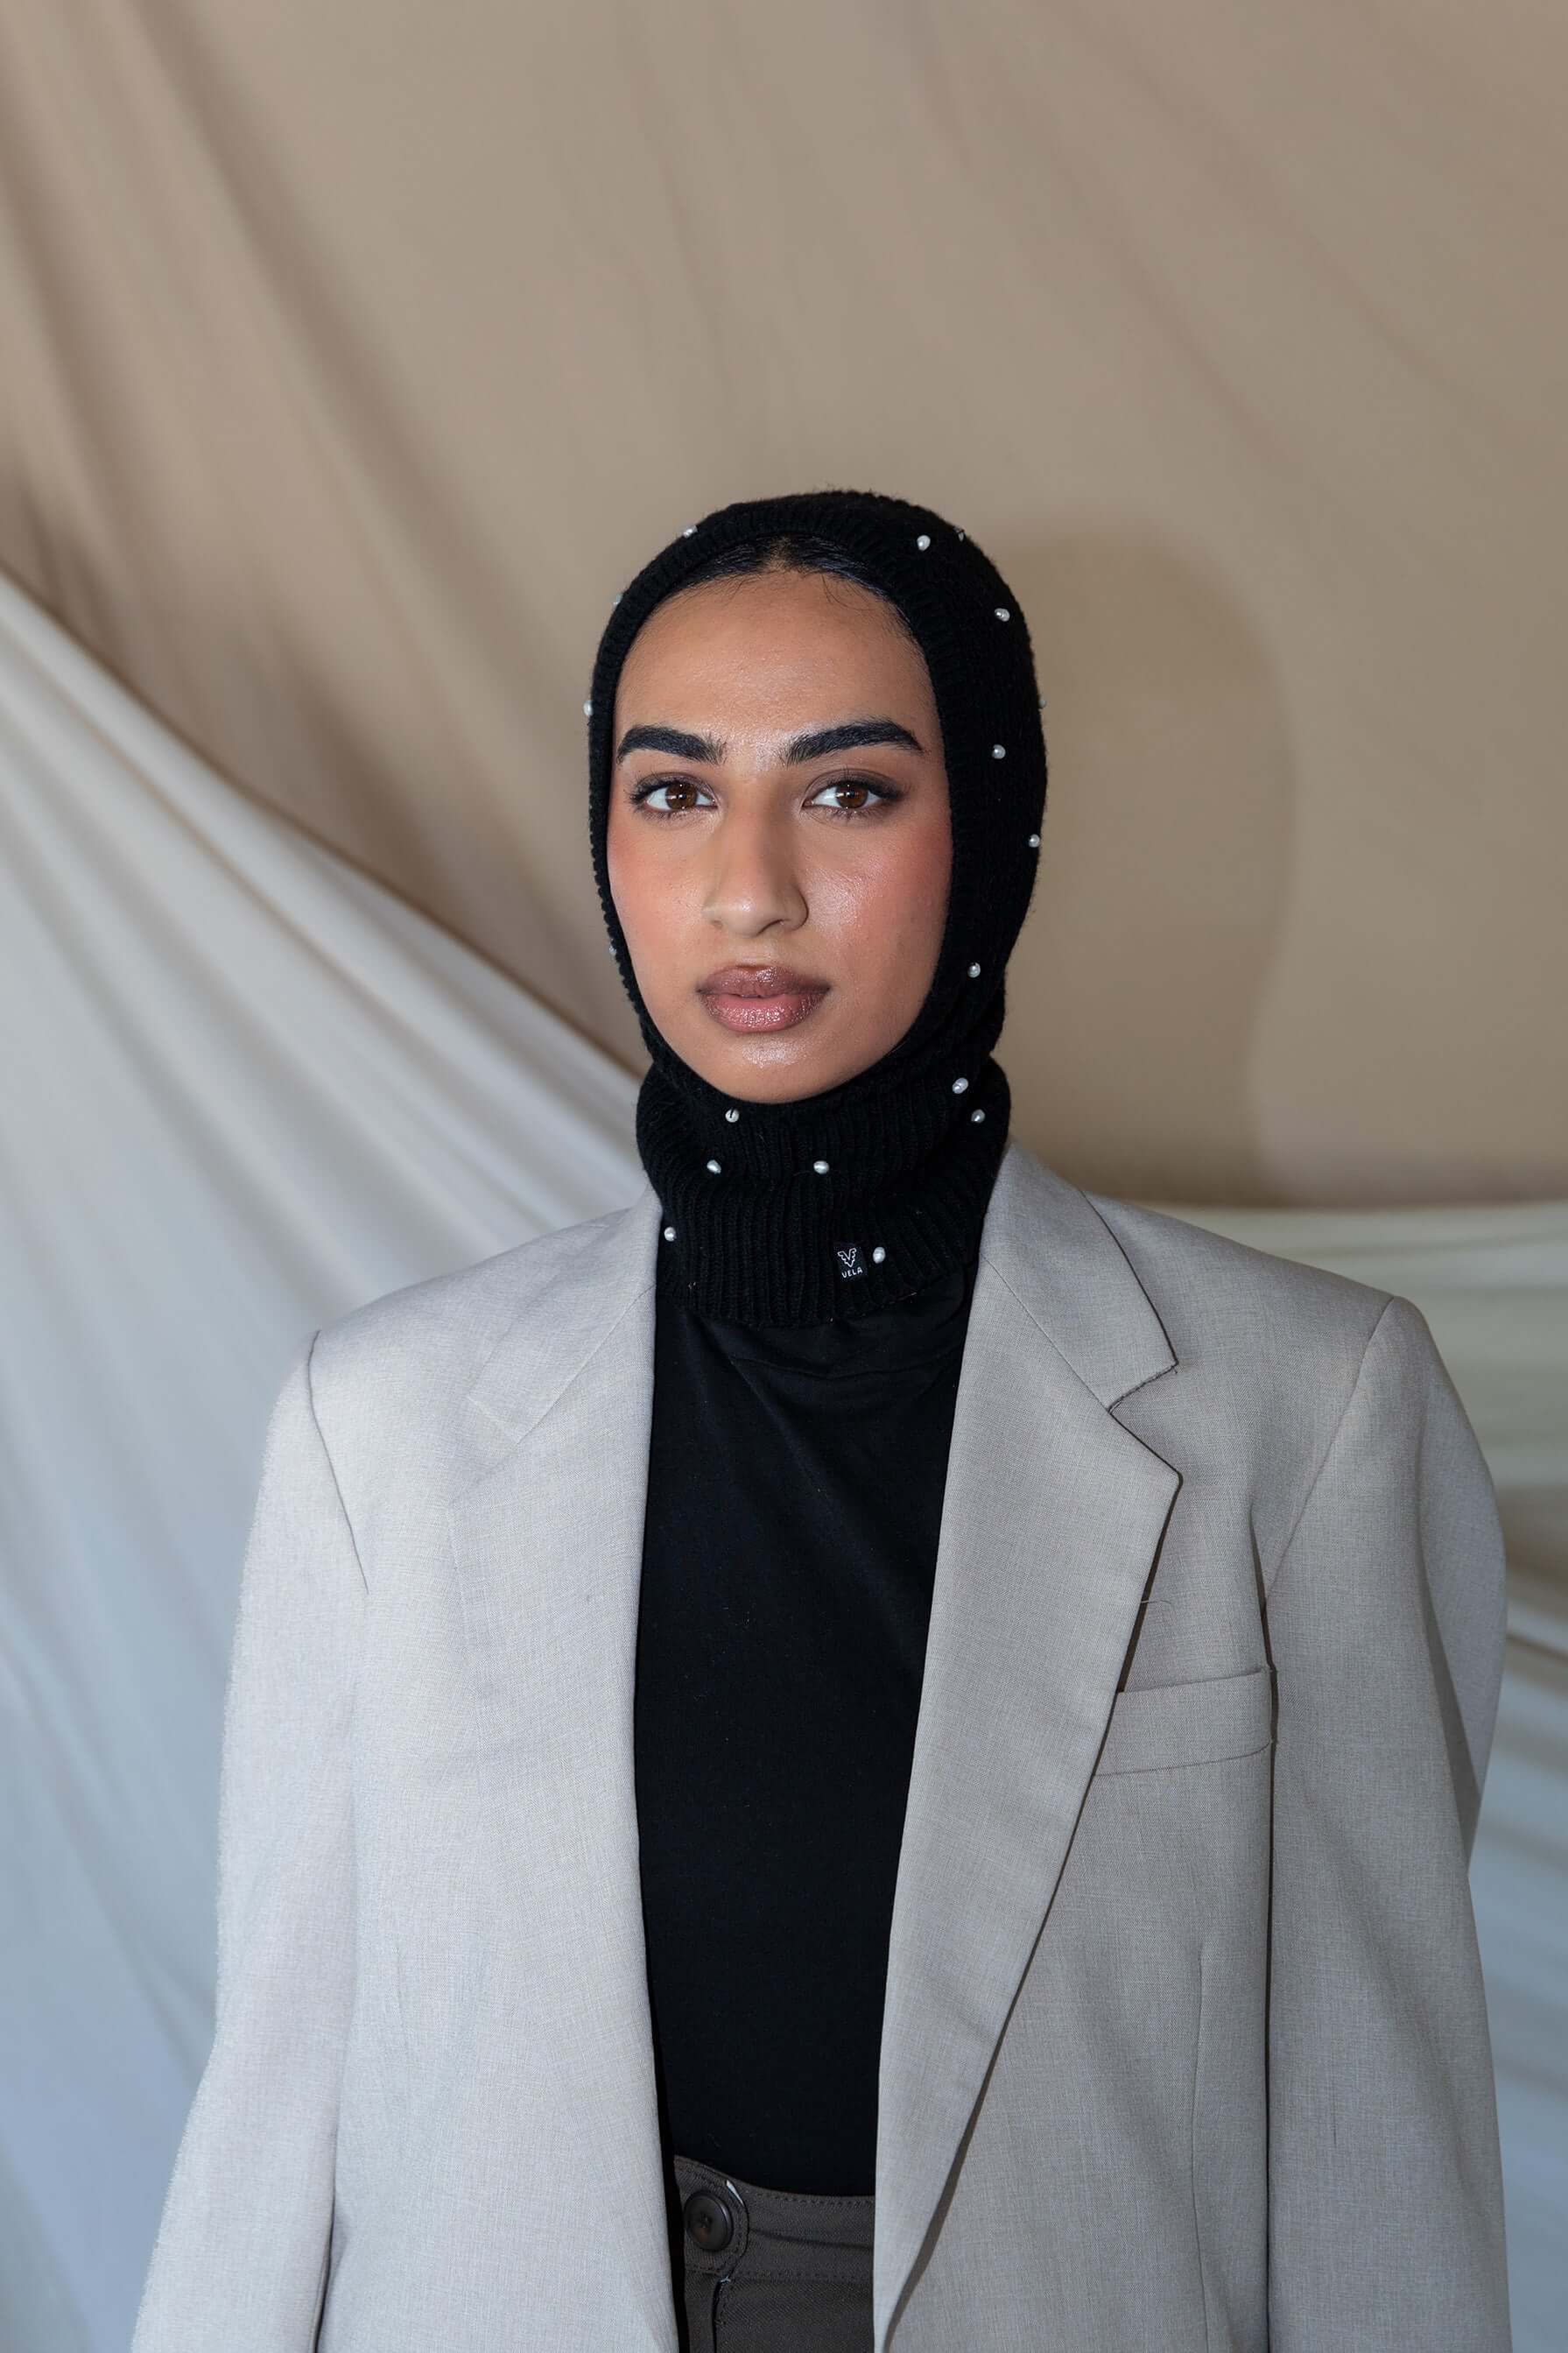 Hijab Magnets – Equal Entrance